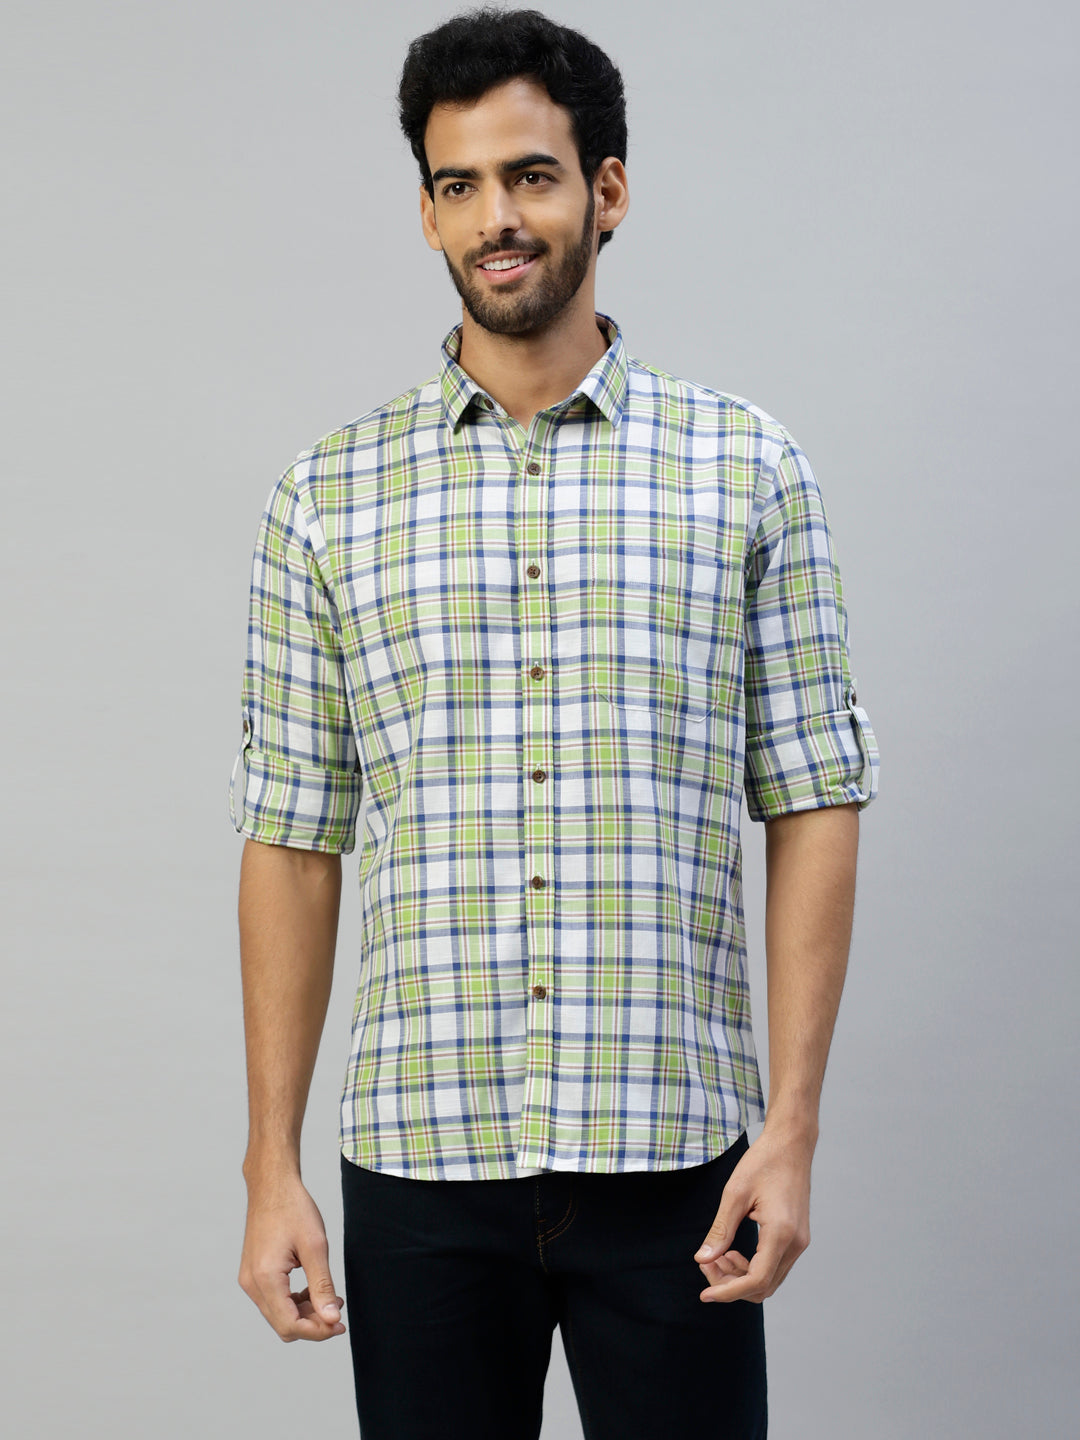 Don Vino Men's Green & Blue Casual Checks Shirt with Full Sleeves